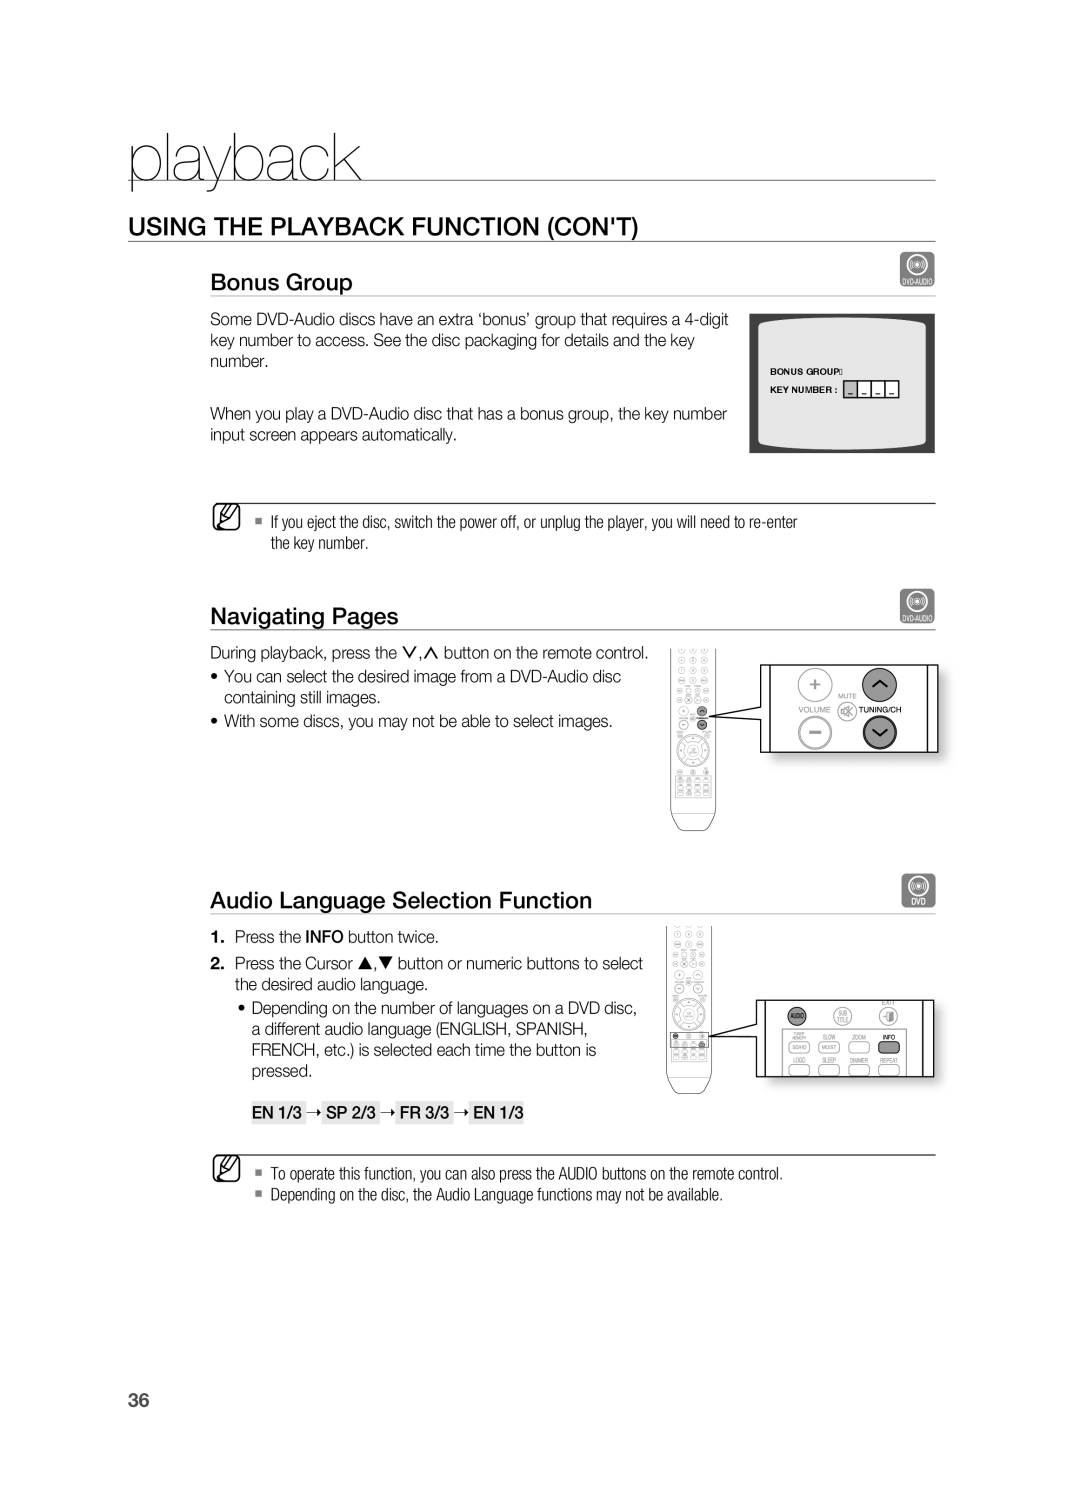 Samsung HT-X810 user manual Bonus Group, Navigating Pages, Audio language Selection Function, playback 